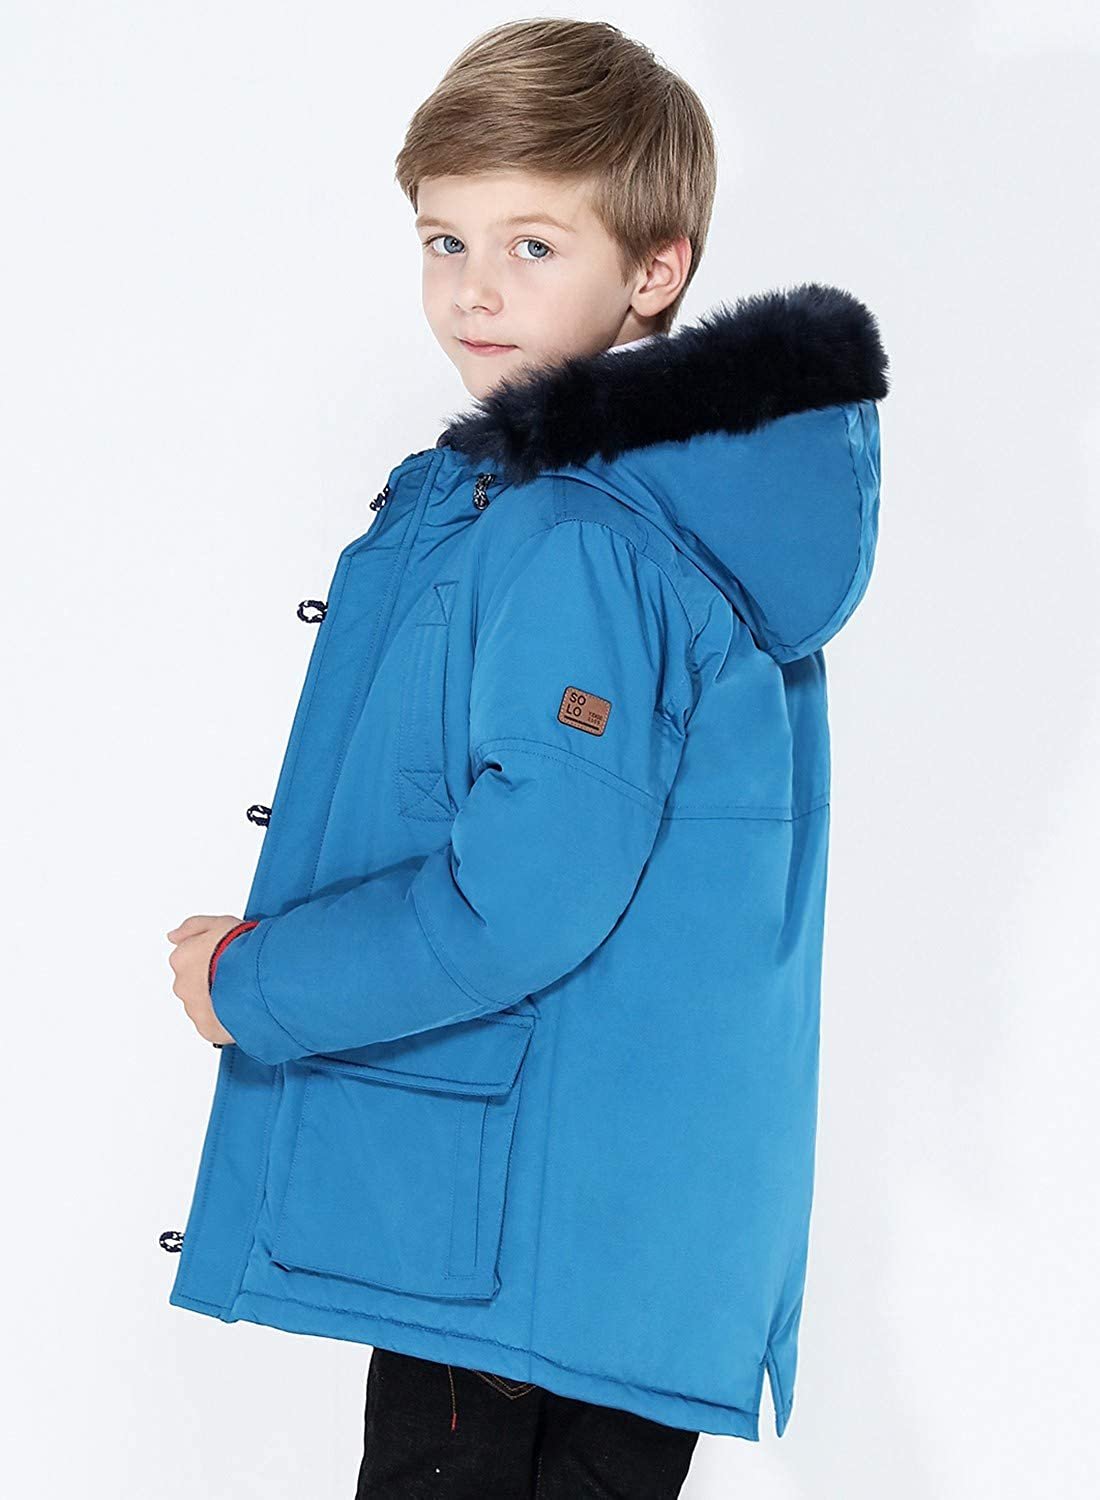 SOLOCOTE Boys Winter Coats Kids Winter Jacket Warm Thick Heavyweight Tough Long Windproof Outwear with Hood